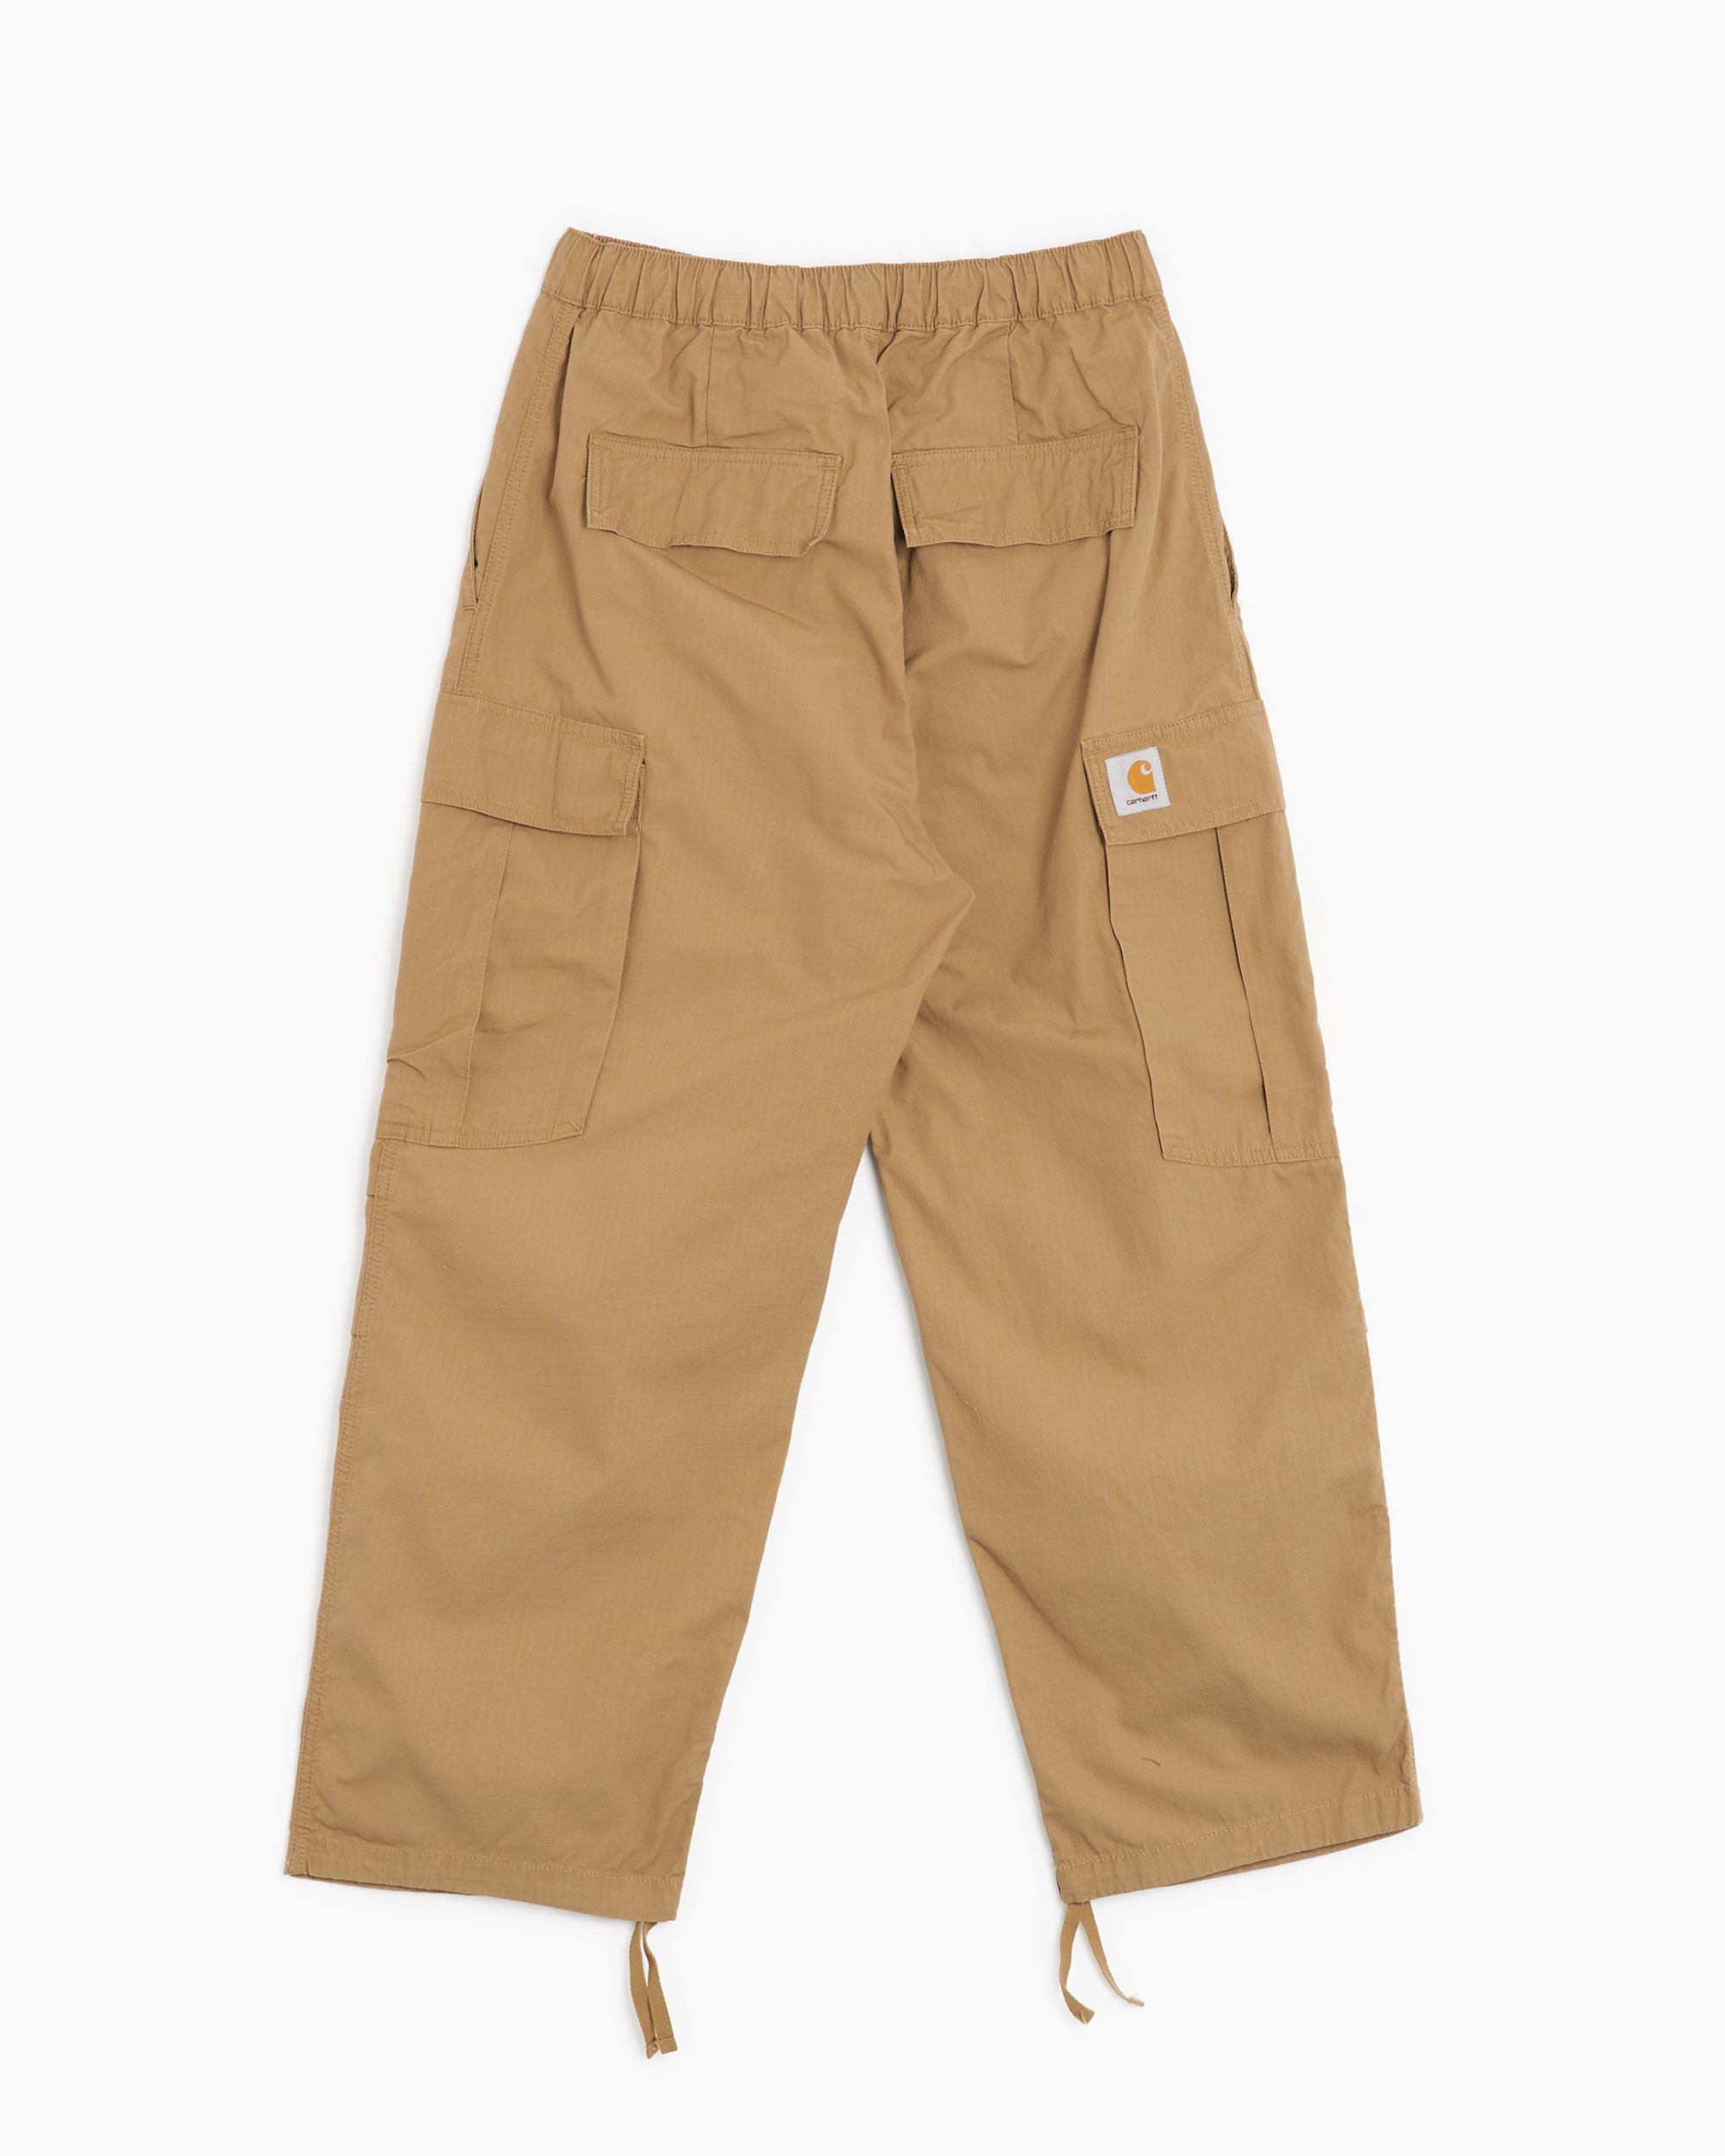 Amazon.com: Carhartt Men's Ripstop Cargo Work Pant,Dark Coffee,48W X 30L:  Casual Pants: Clothing, Shoes & Jewelry